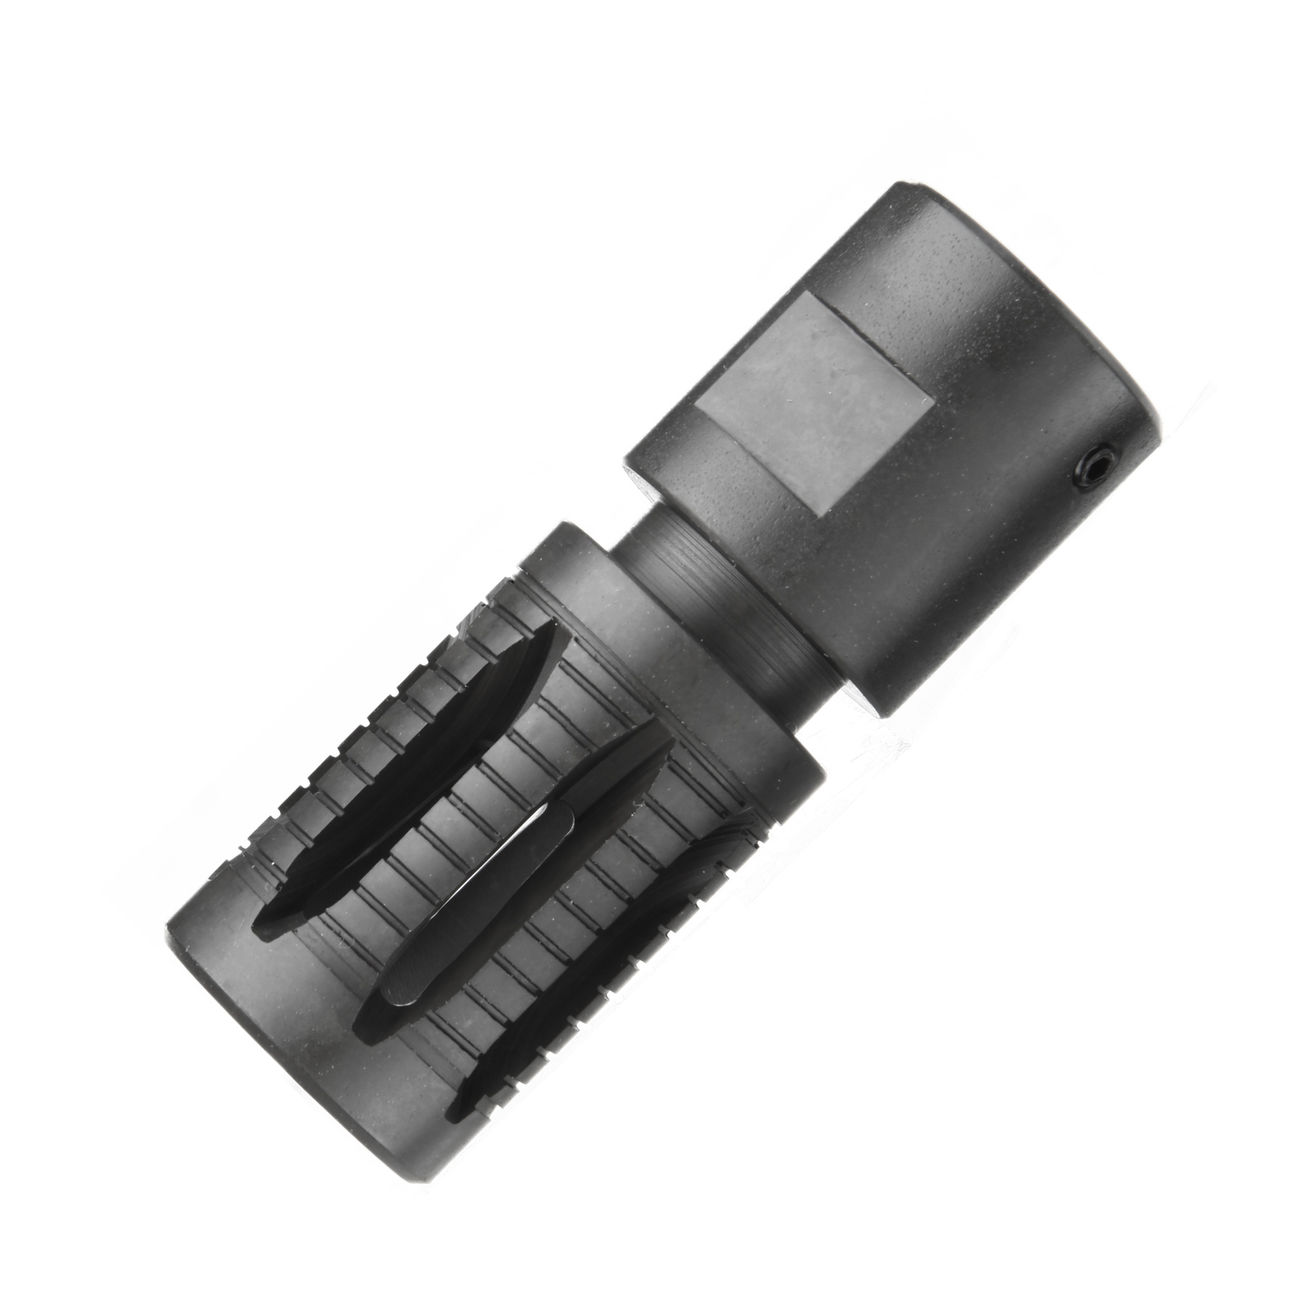 VFC Stahl G36 KSK QD Flash-Hider grau-schwarz 14mm- Bild 2